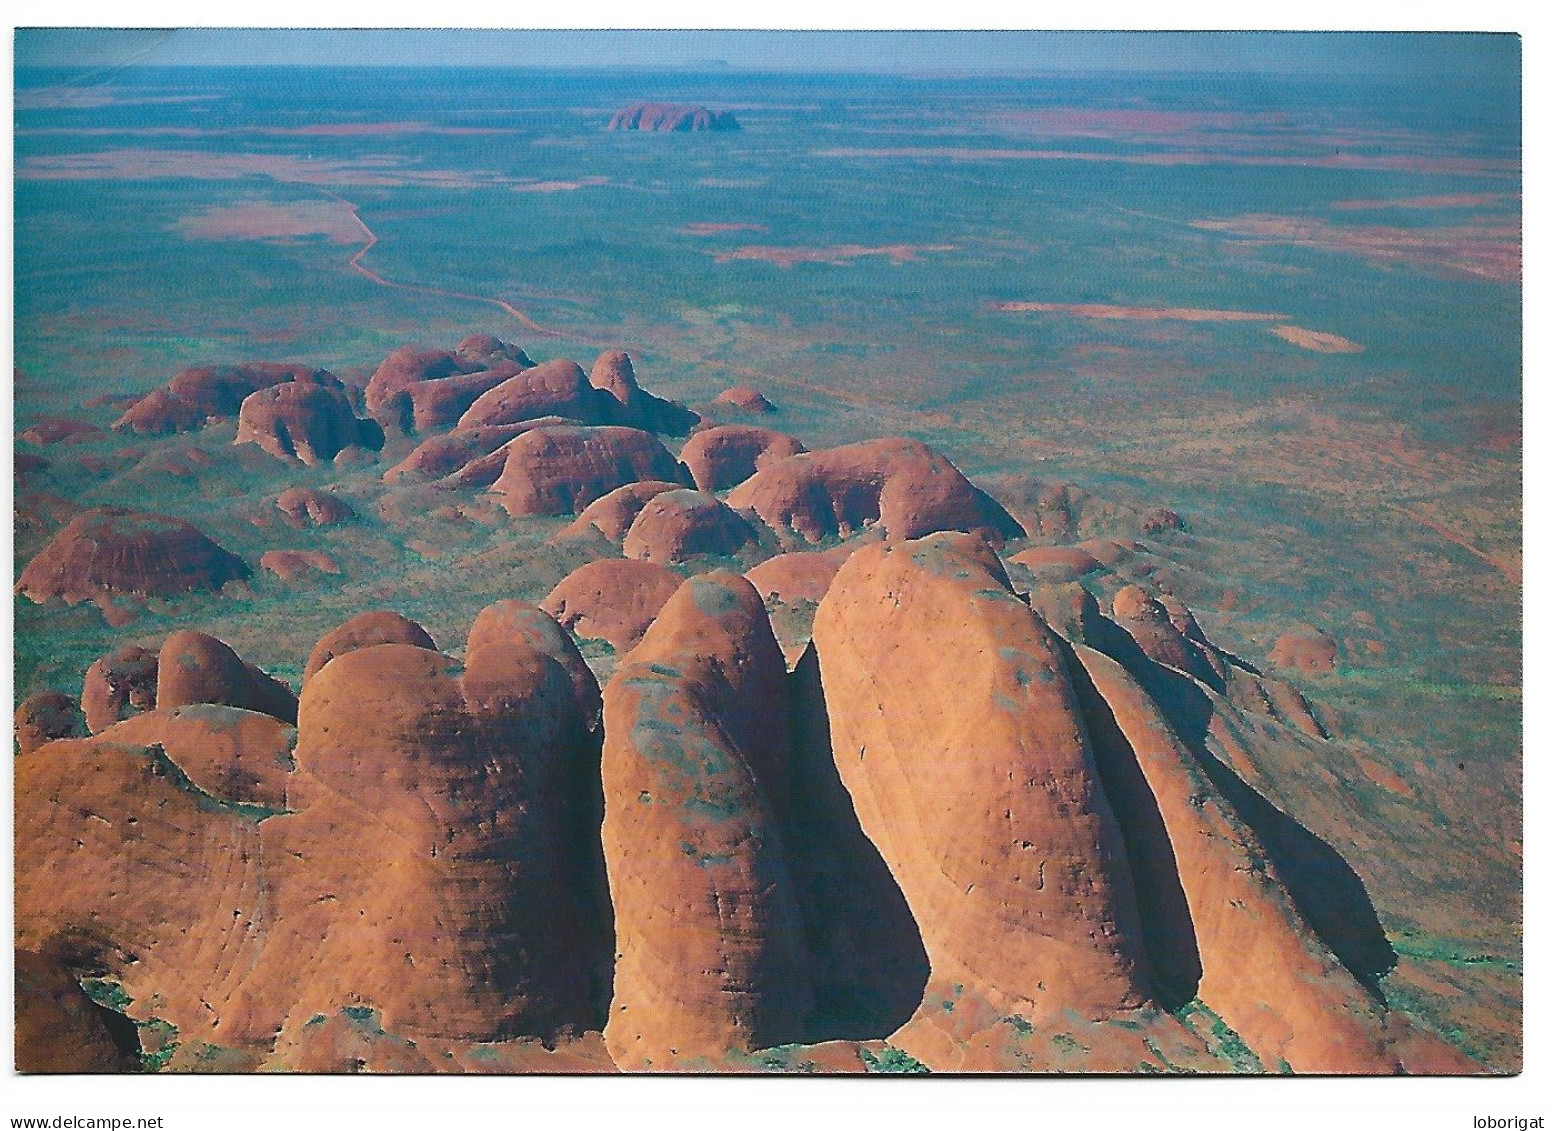 THE OLGAS - KATA TJUTA / AYERS ROCK, ULURU / MT. CONNER, ATILA.-  NORTHERN TERRITORY.-  ( AUSTRALIA ) - Uluru & The Olgas